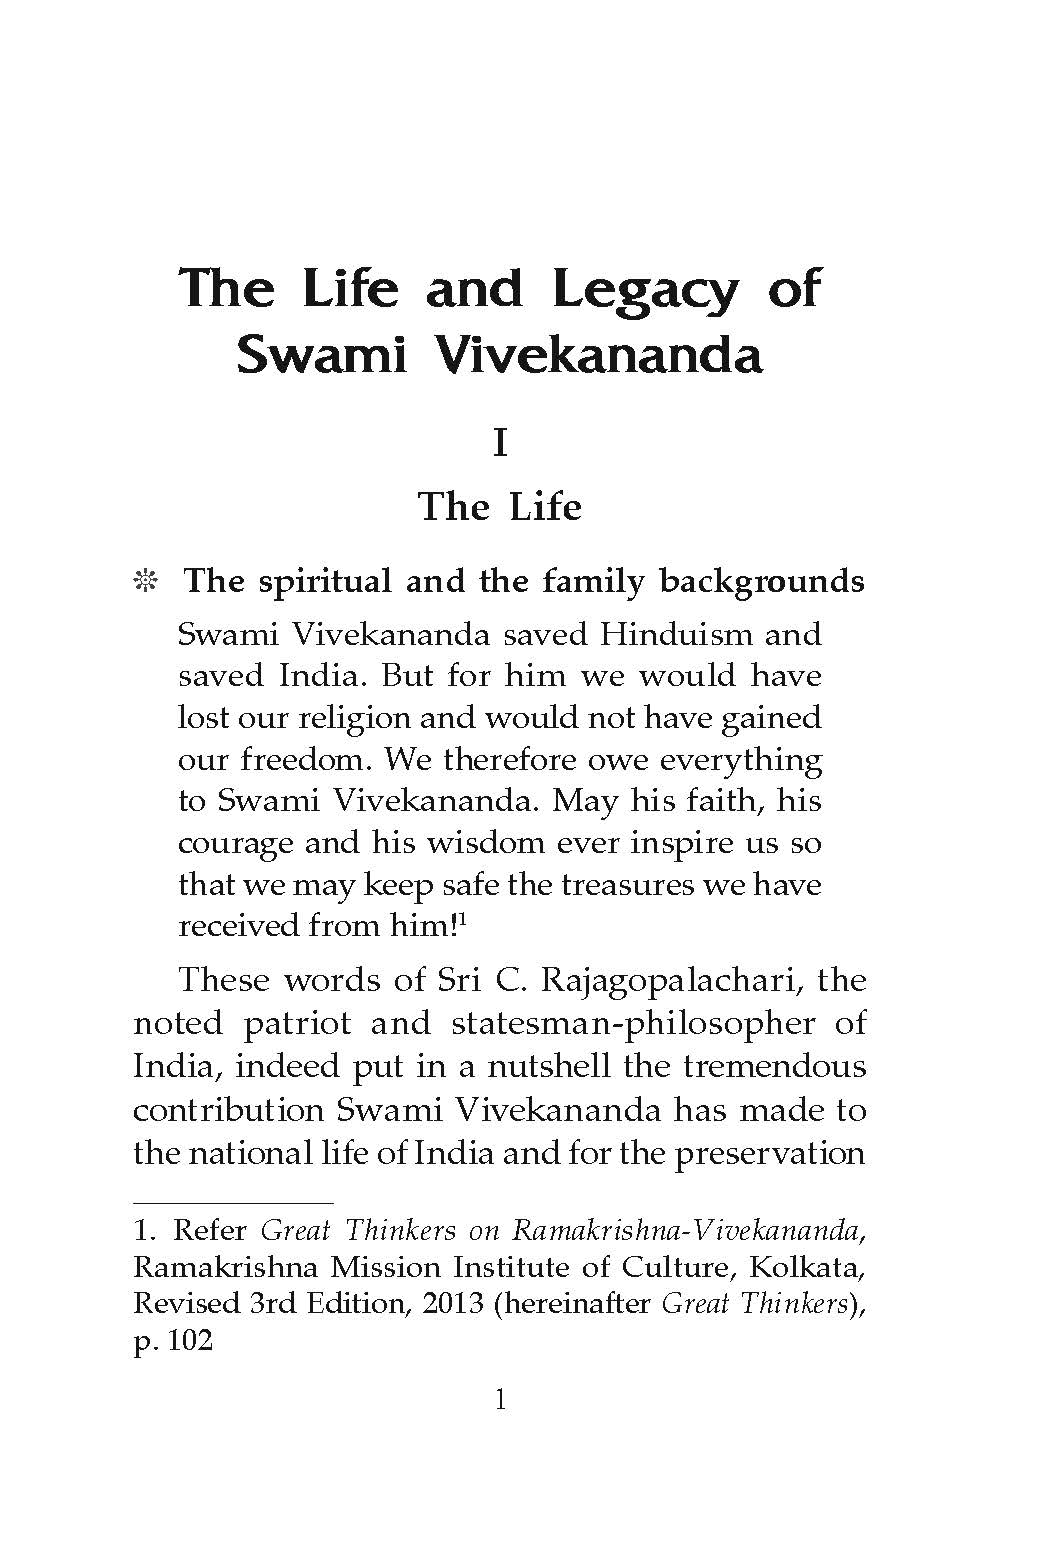 Swami Vivekananda - His Life and Legacy